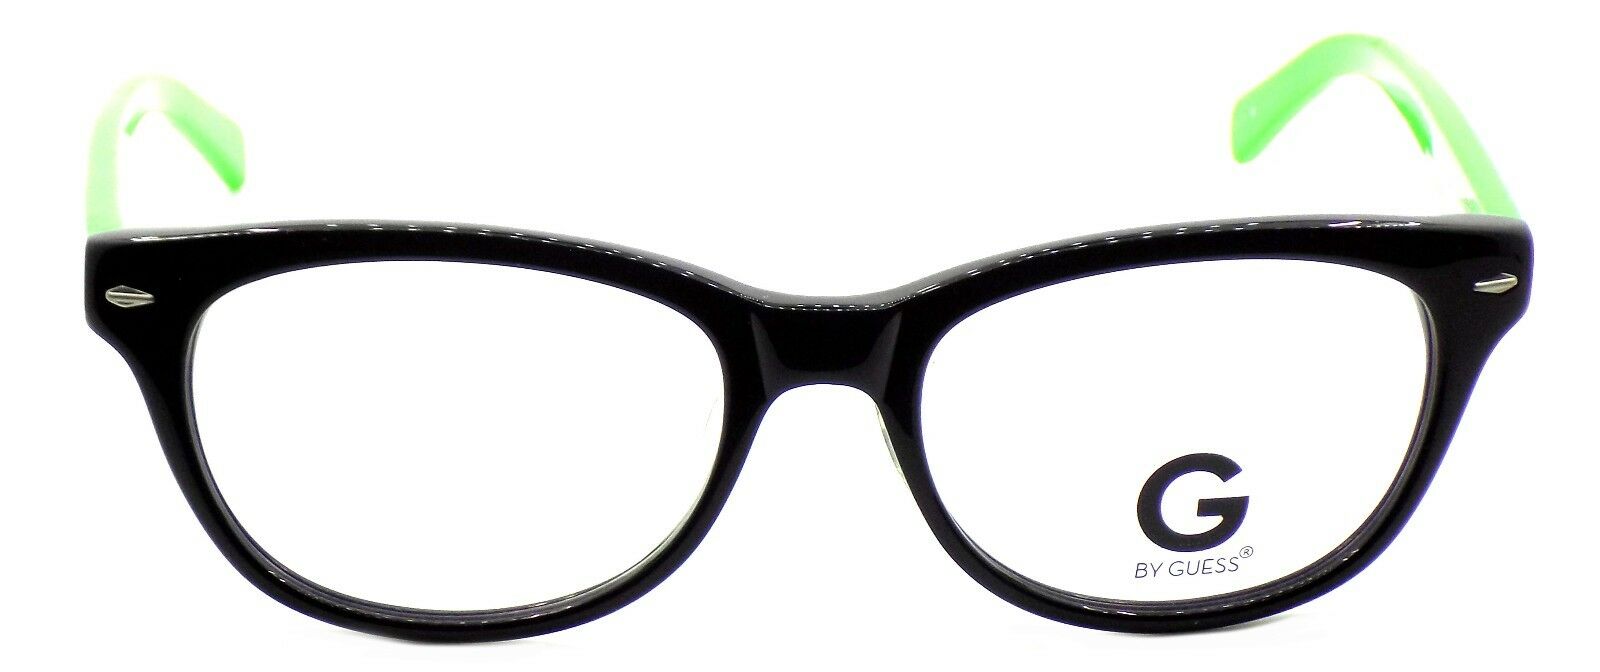 2-G by Guess GGA201 BLKGRN ASIAN FIT Eyeglasses Frames 53-18-140 Black + Case-715583676091-IKSpecs